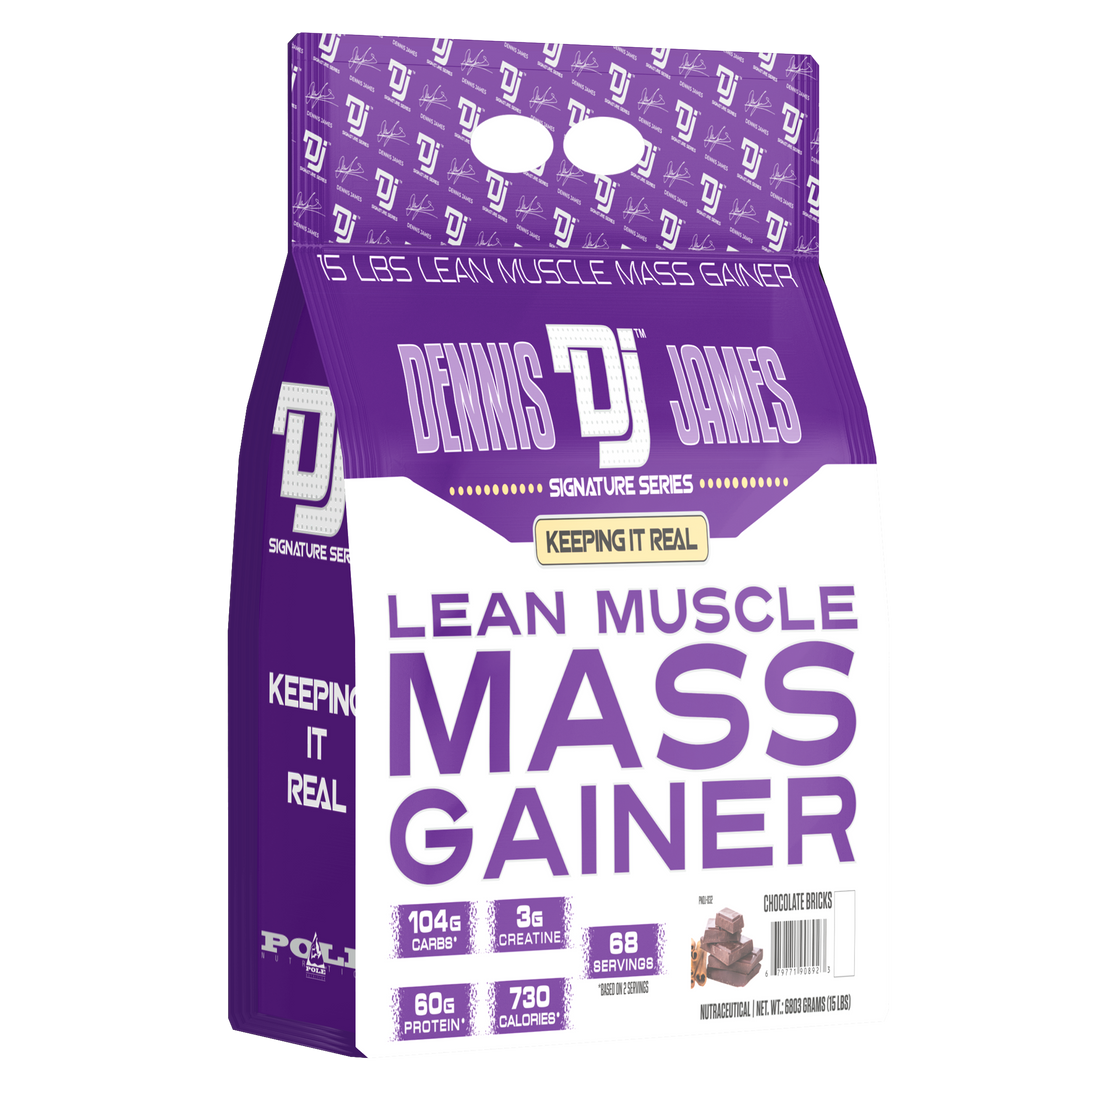 Dennis James Signature Series Lean Muscle Mass Gainer